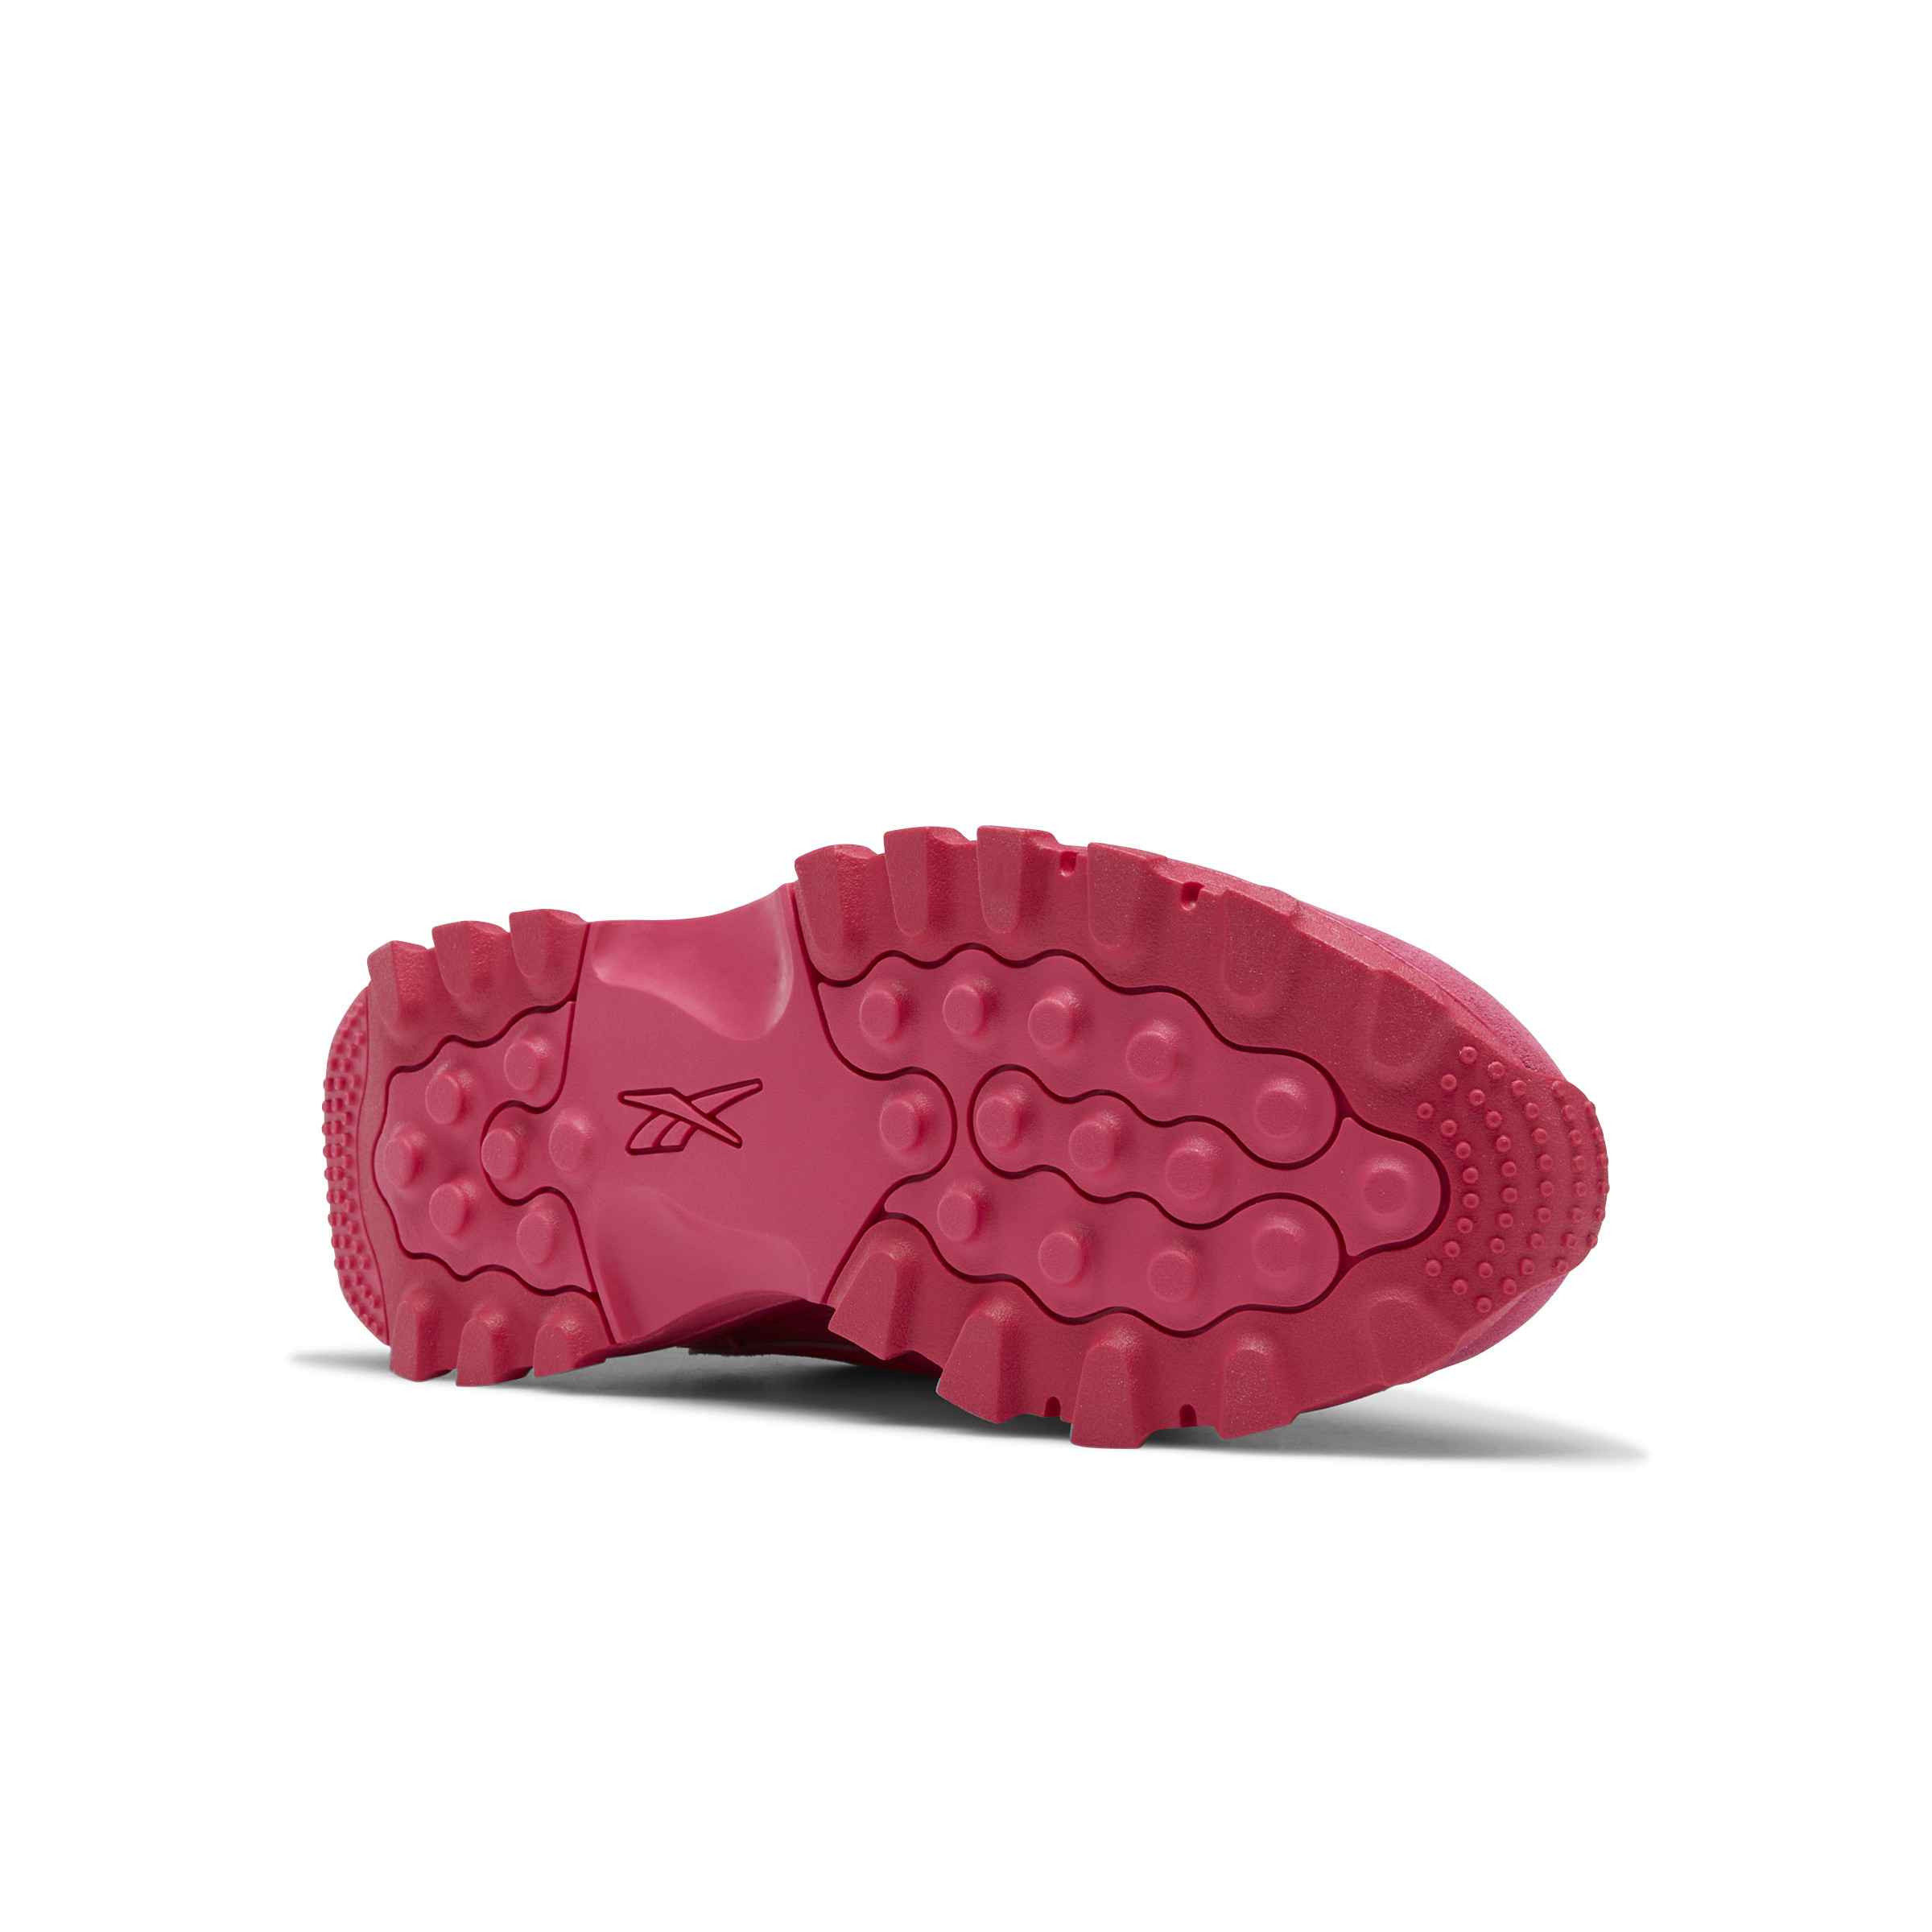 Classic Leather Cardi B V2 Shoes, Pink Fuchsia, large image number 2